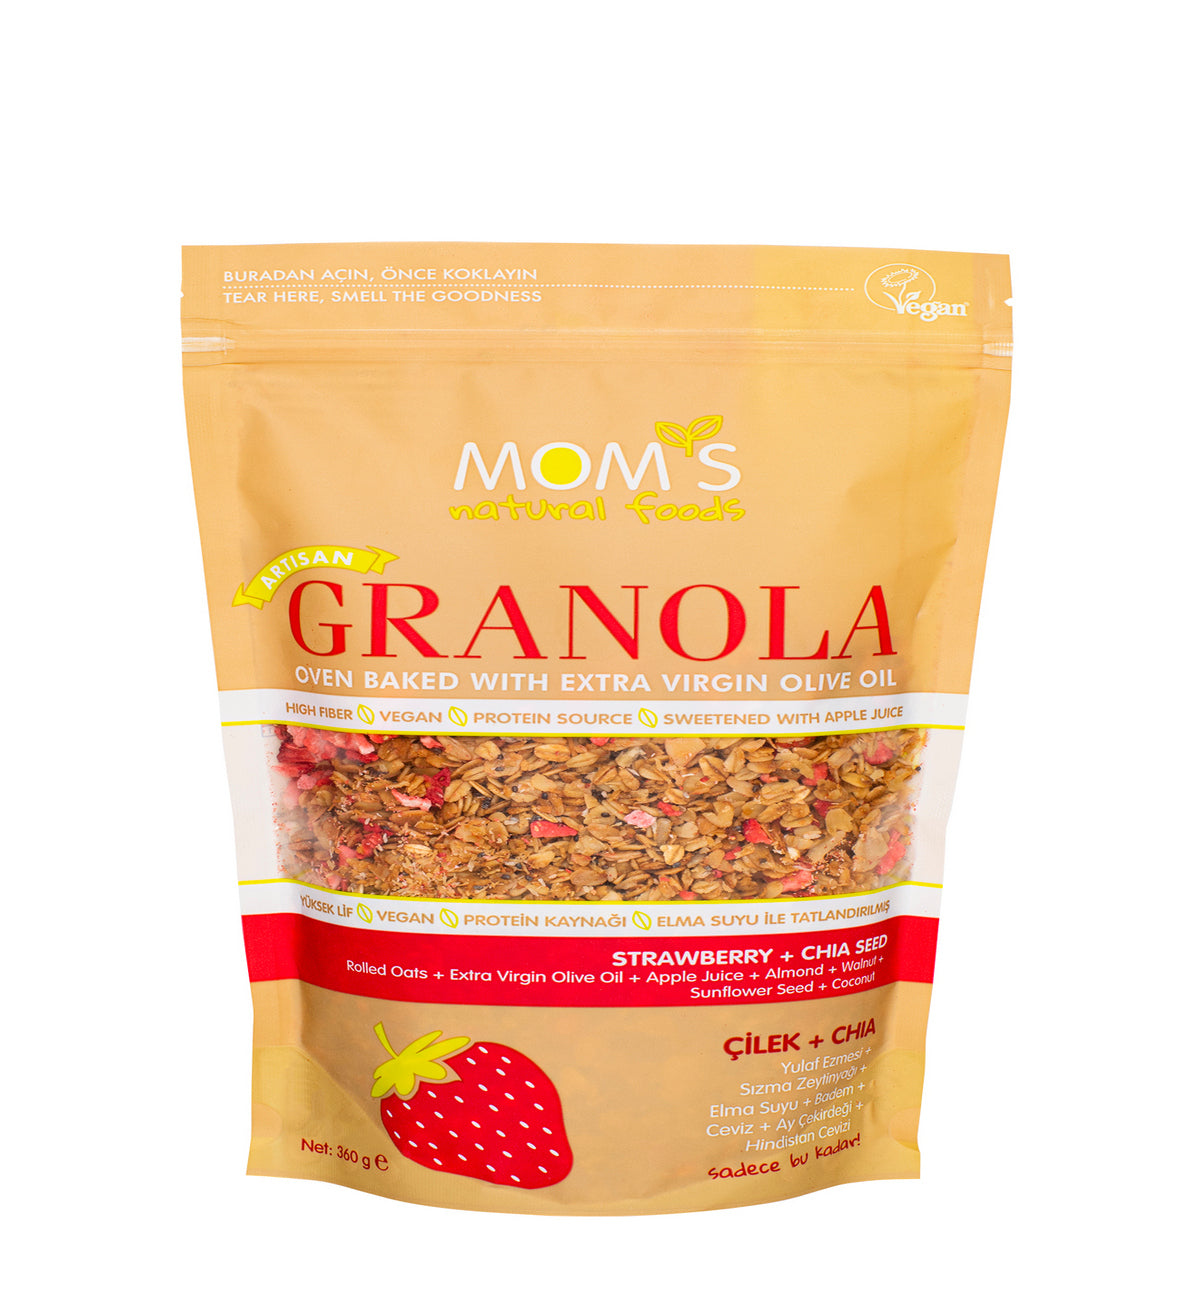 Granola: Strawberry and Chia seeds